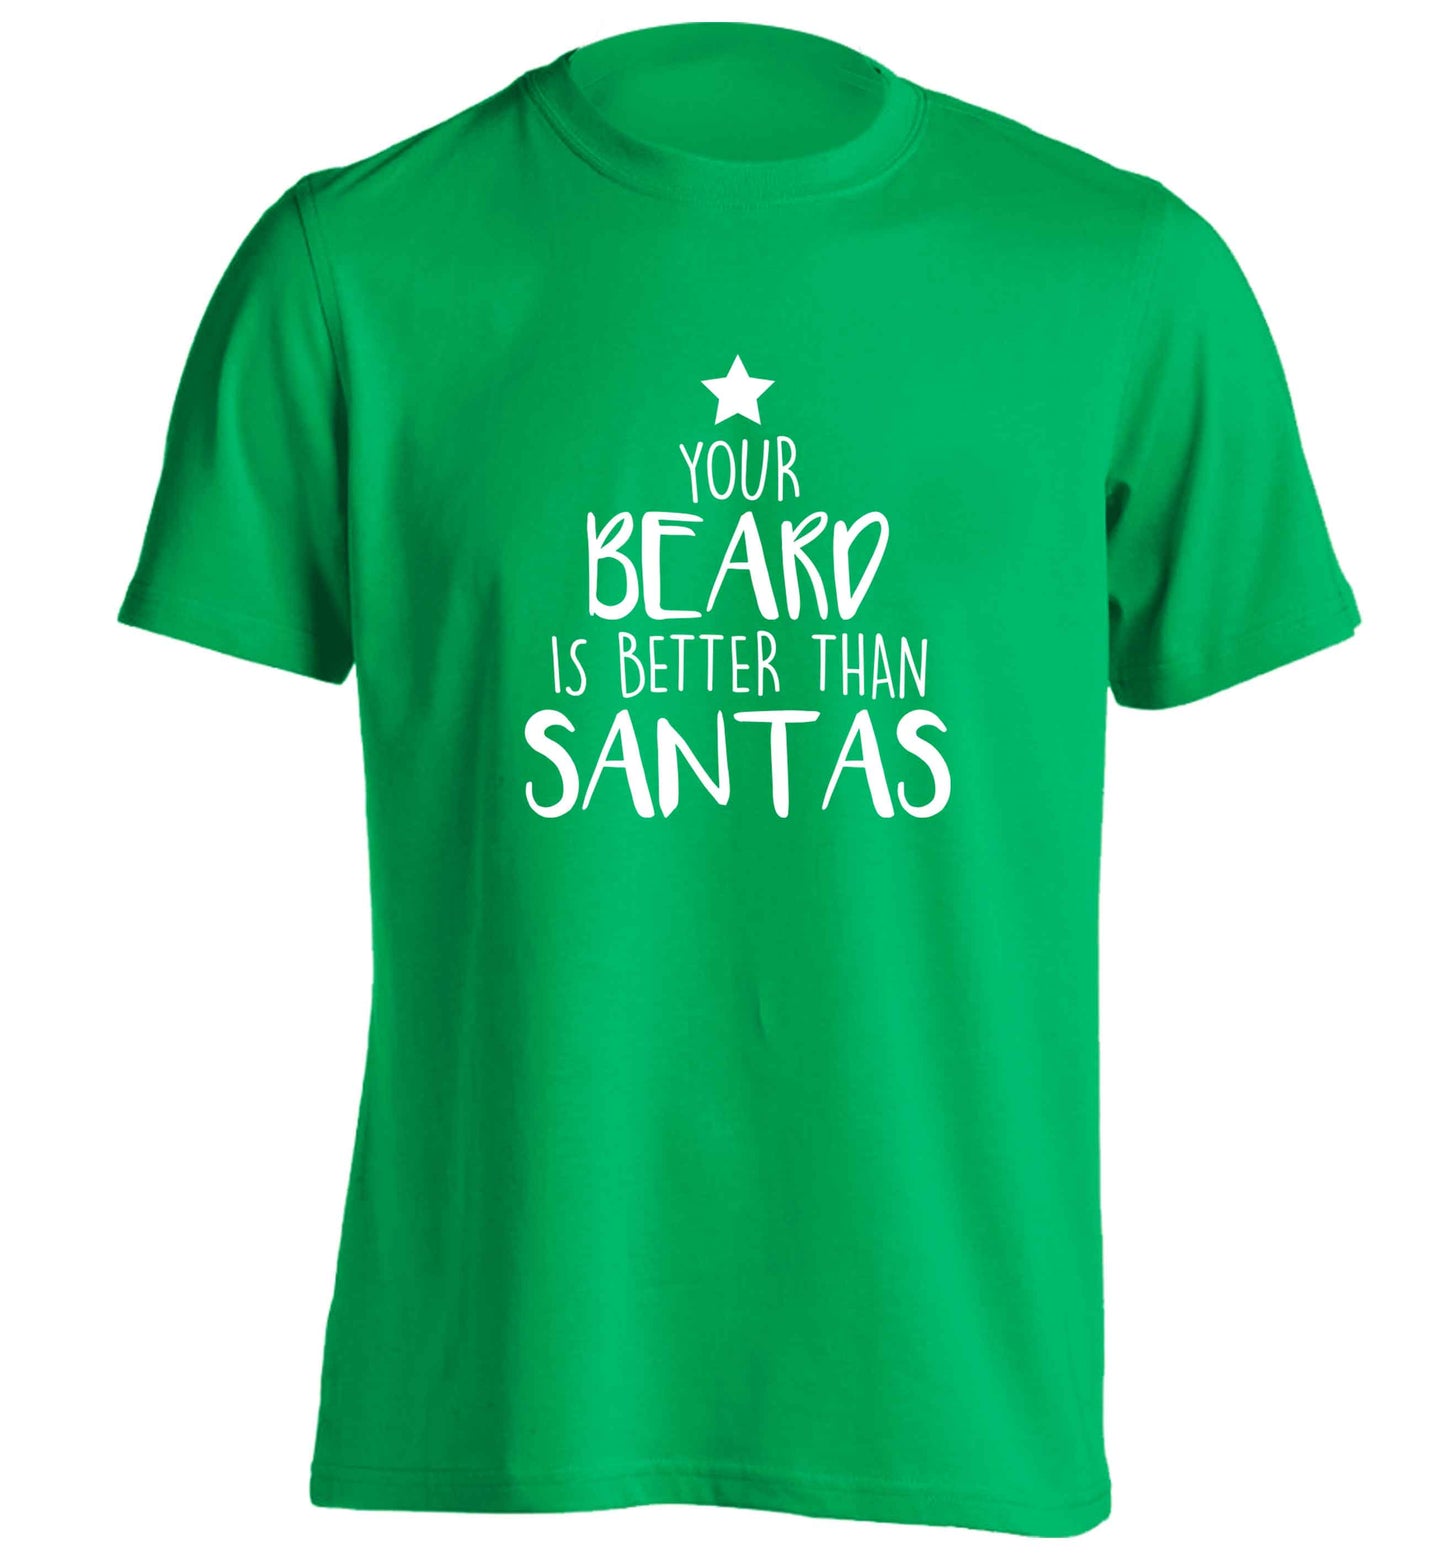 Your Beard Better than Santas adults unisex green Tshirt 2XL